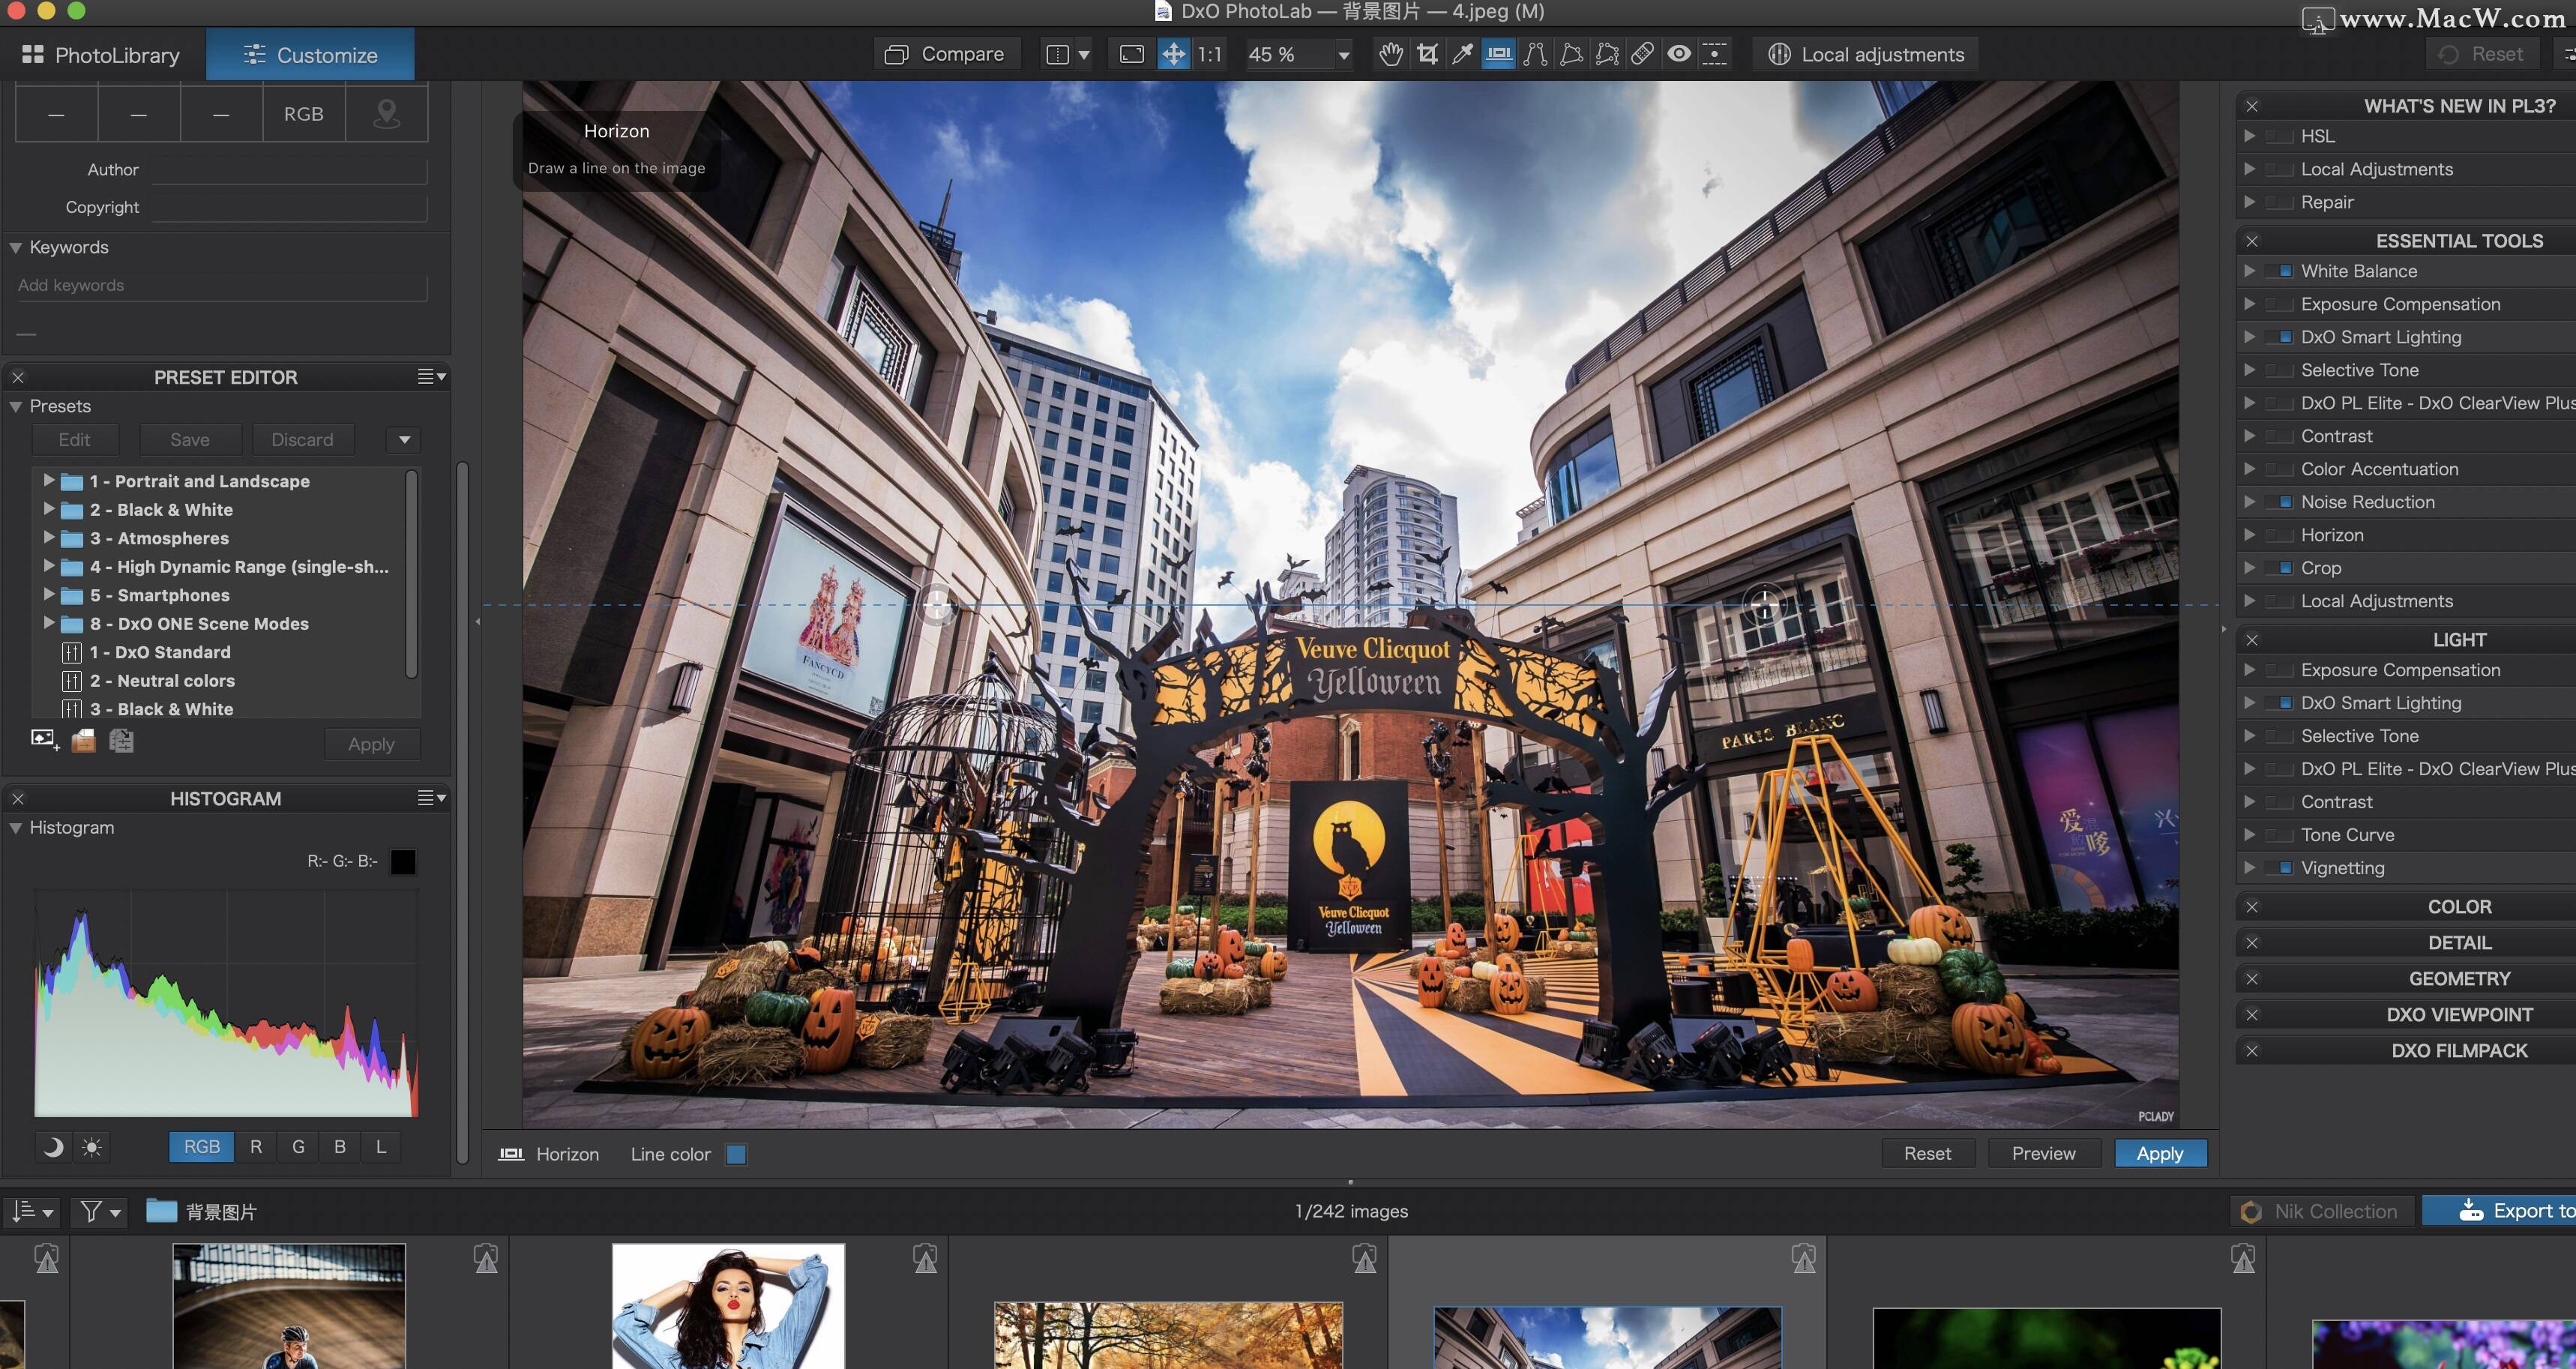 ACDSee Photo Studio 6 for Mac(最好用的图像处理软件) - 数据库 - 亿速云